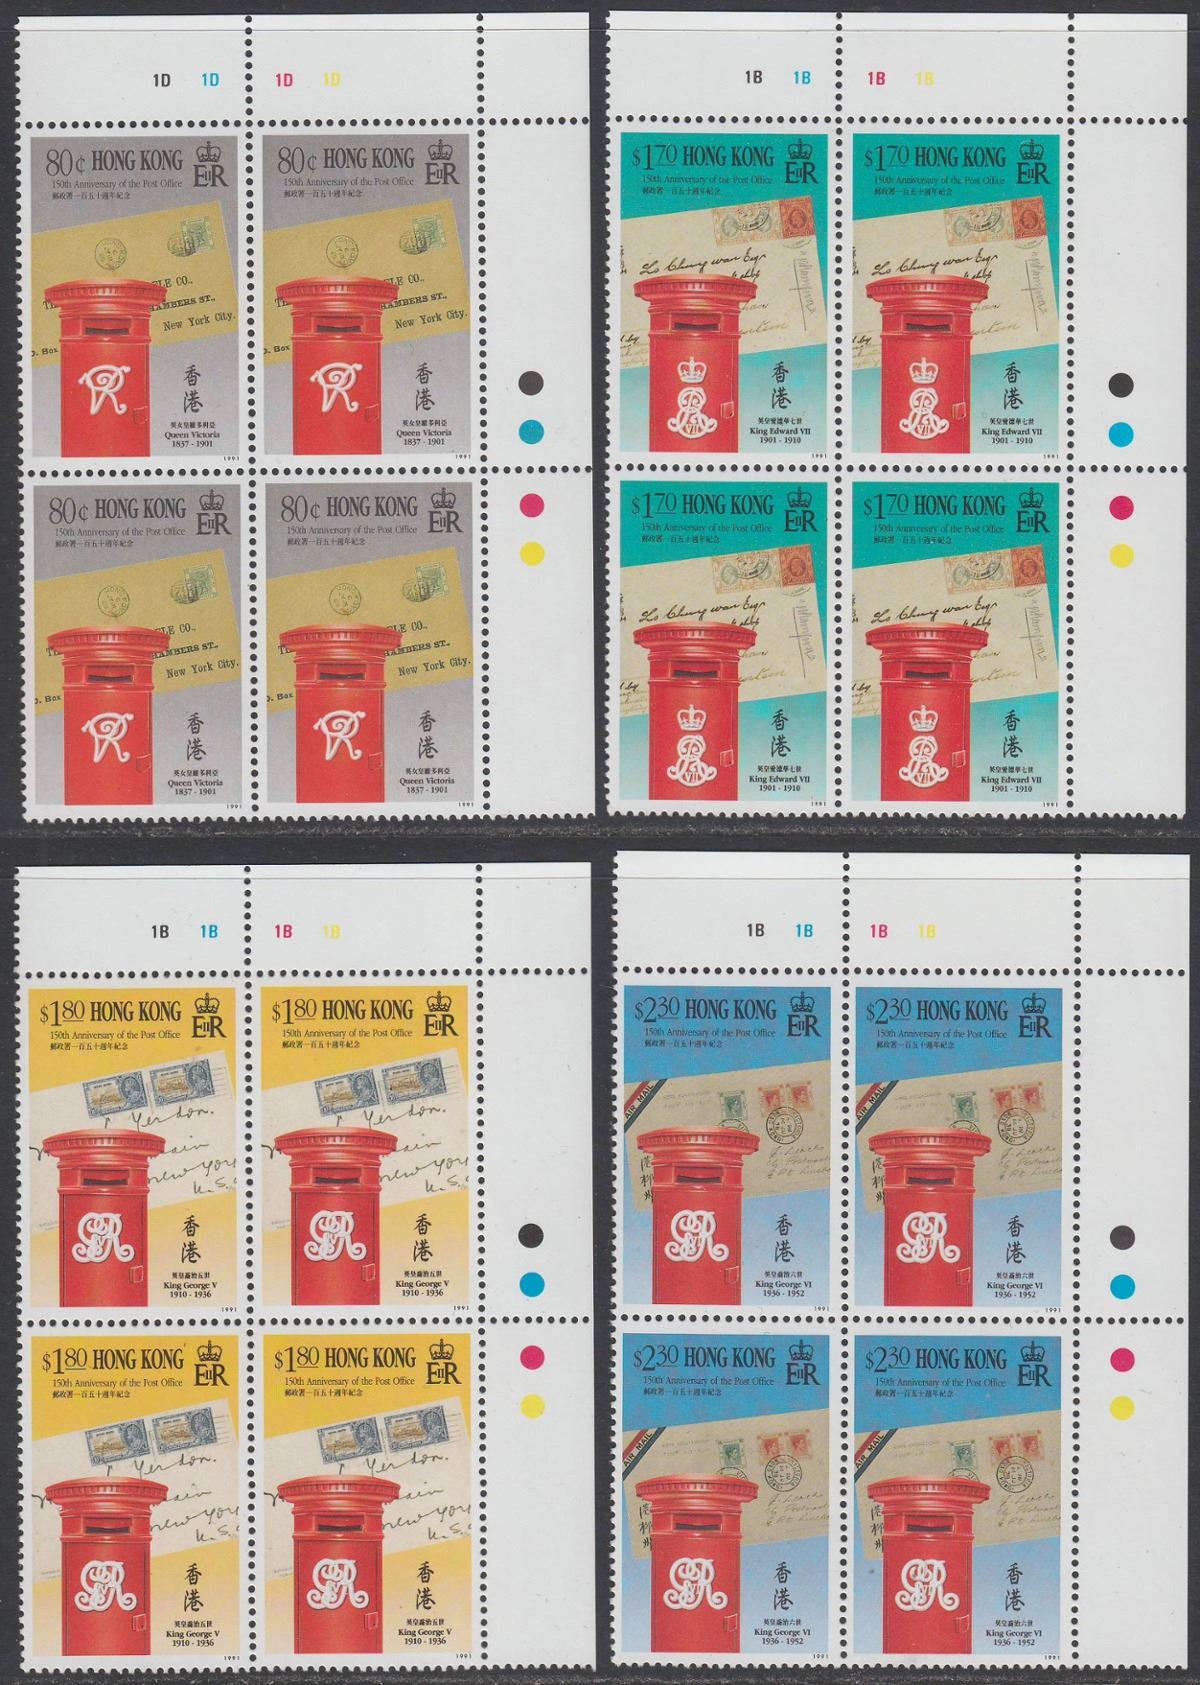 Hong Kong 1991 QEII Post Office Anniv Pl Block Set + MS Mint SG673-MS678 c£42